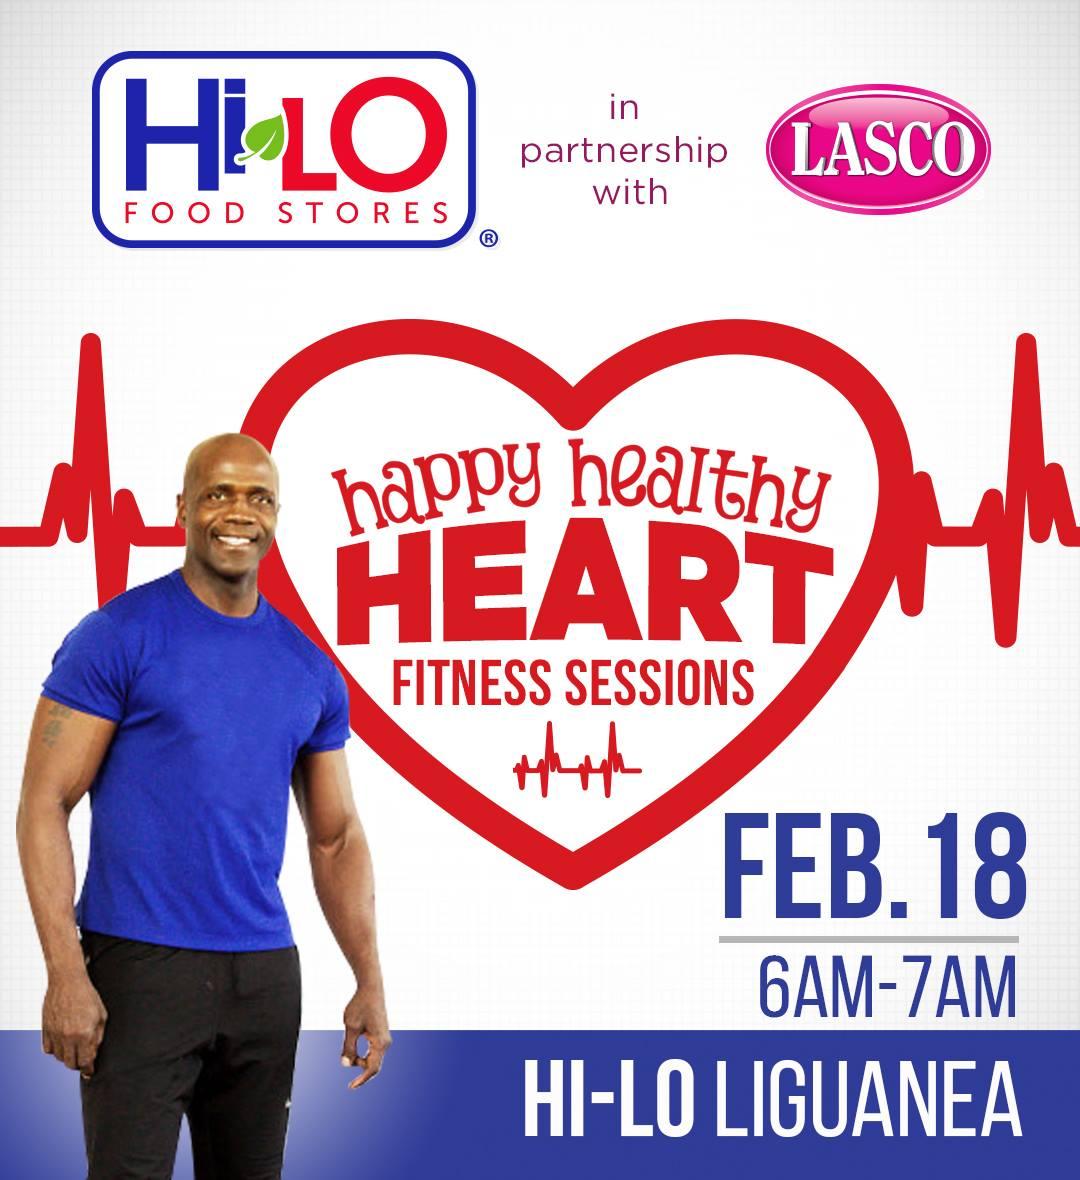 Hi-Lo #HappyHealthyHeart Fitness Session Week 3